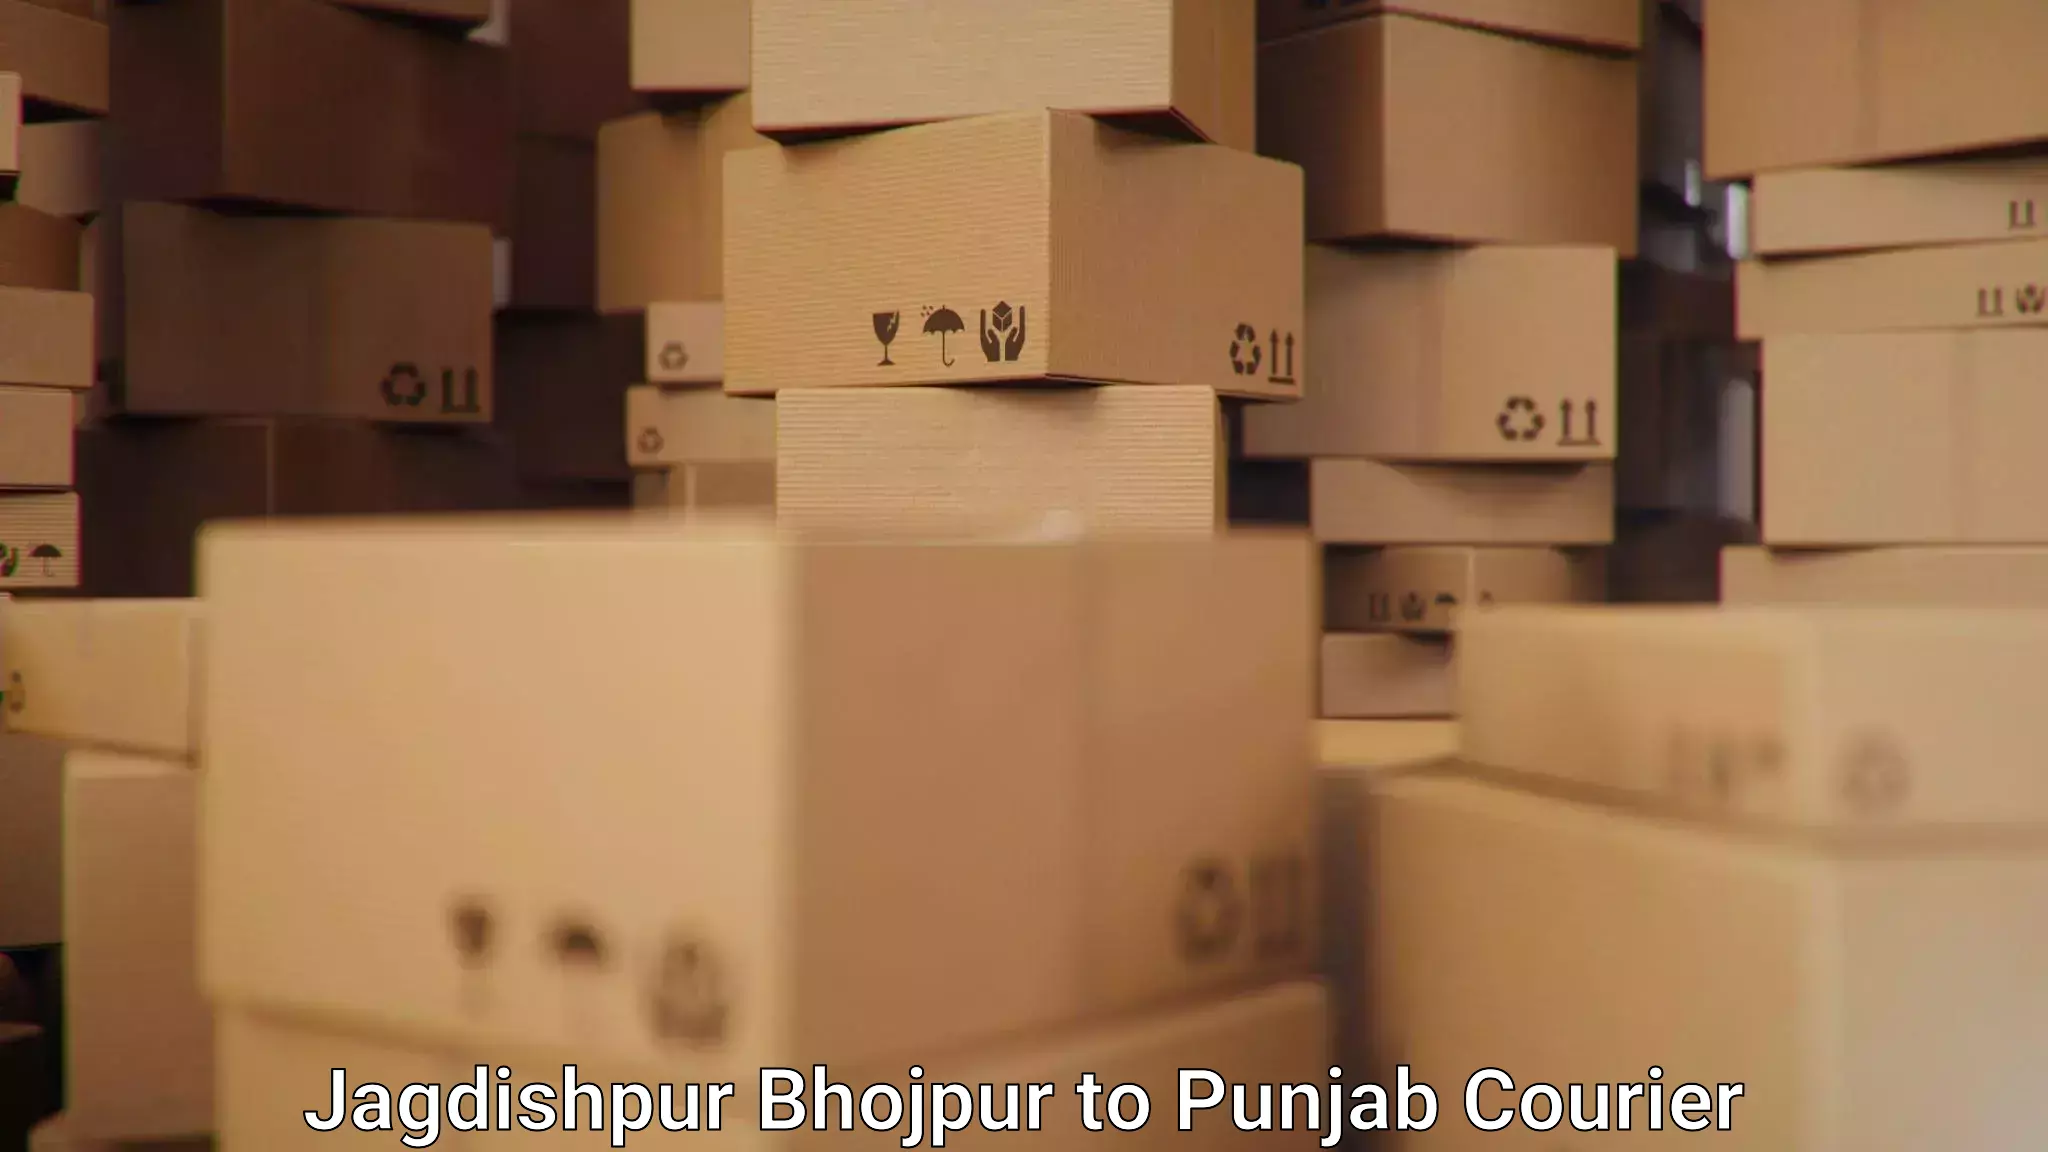 24/7 shipping services Jagdishpur Bhojpur to Faridkot